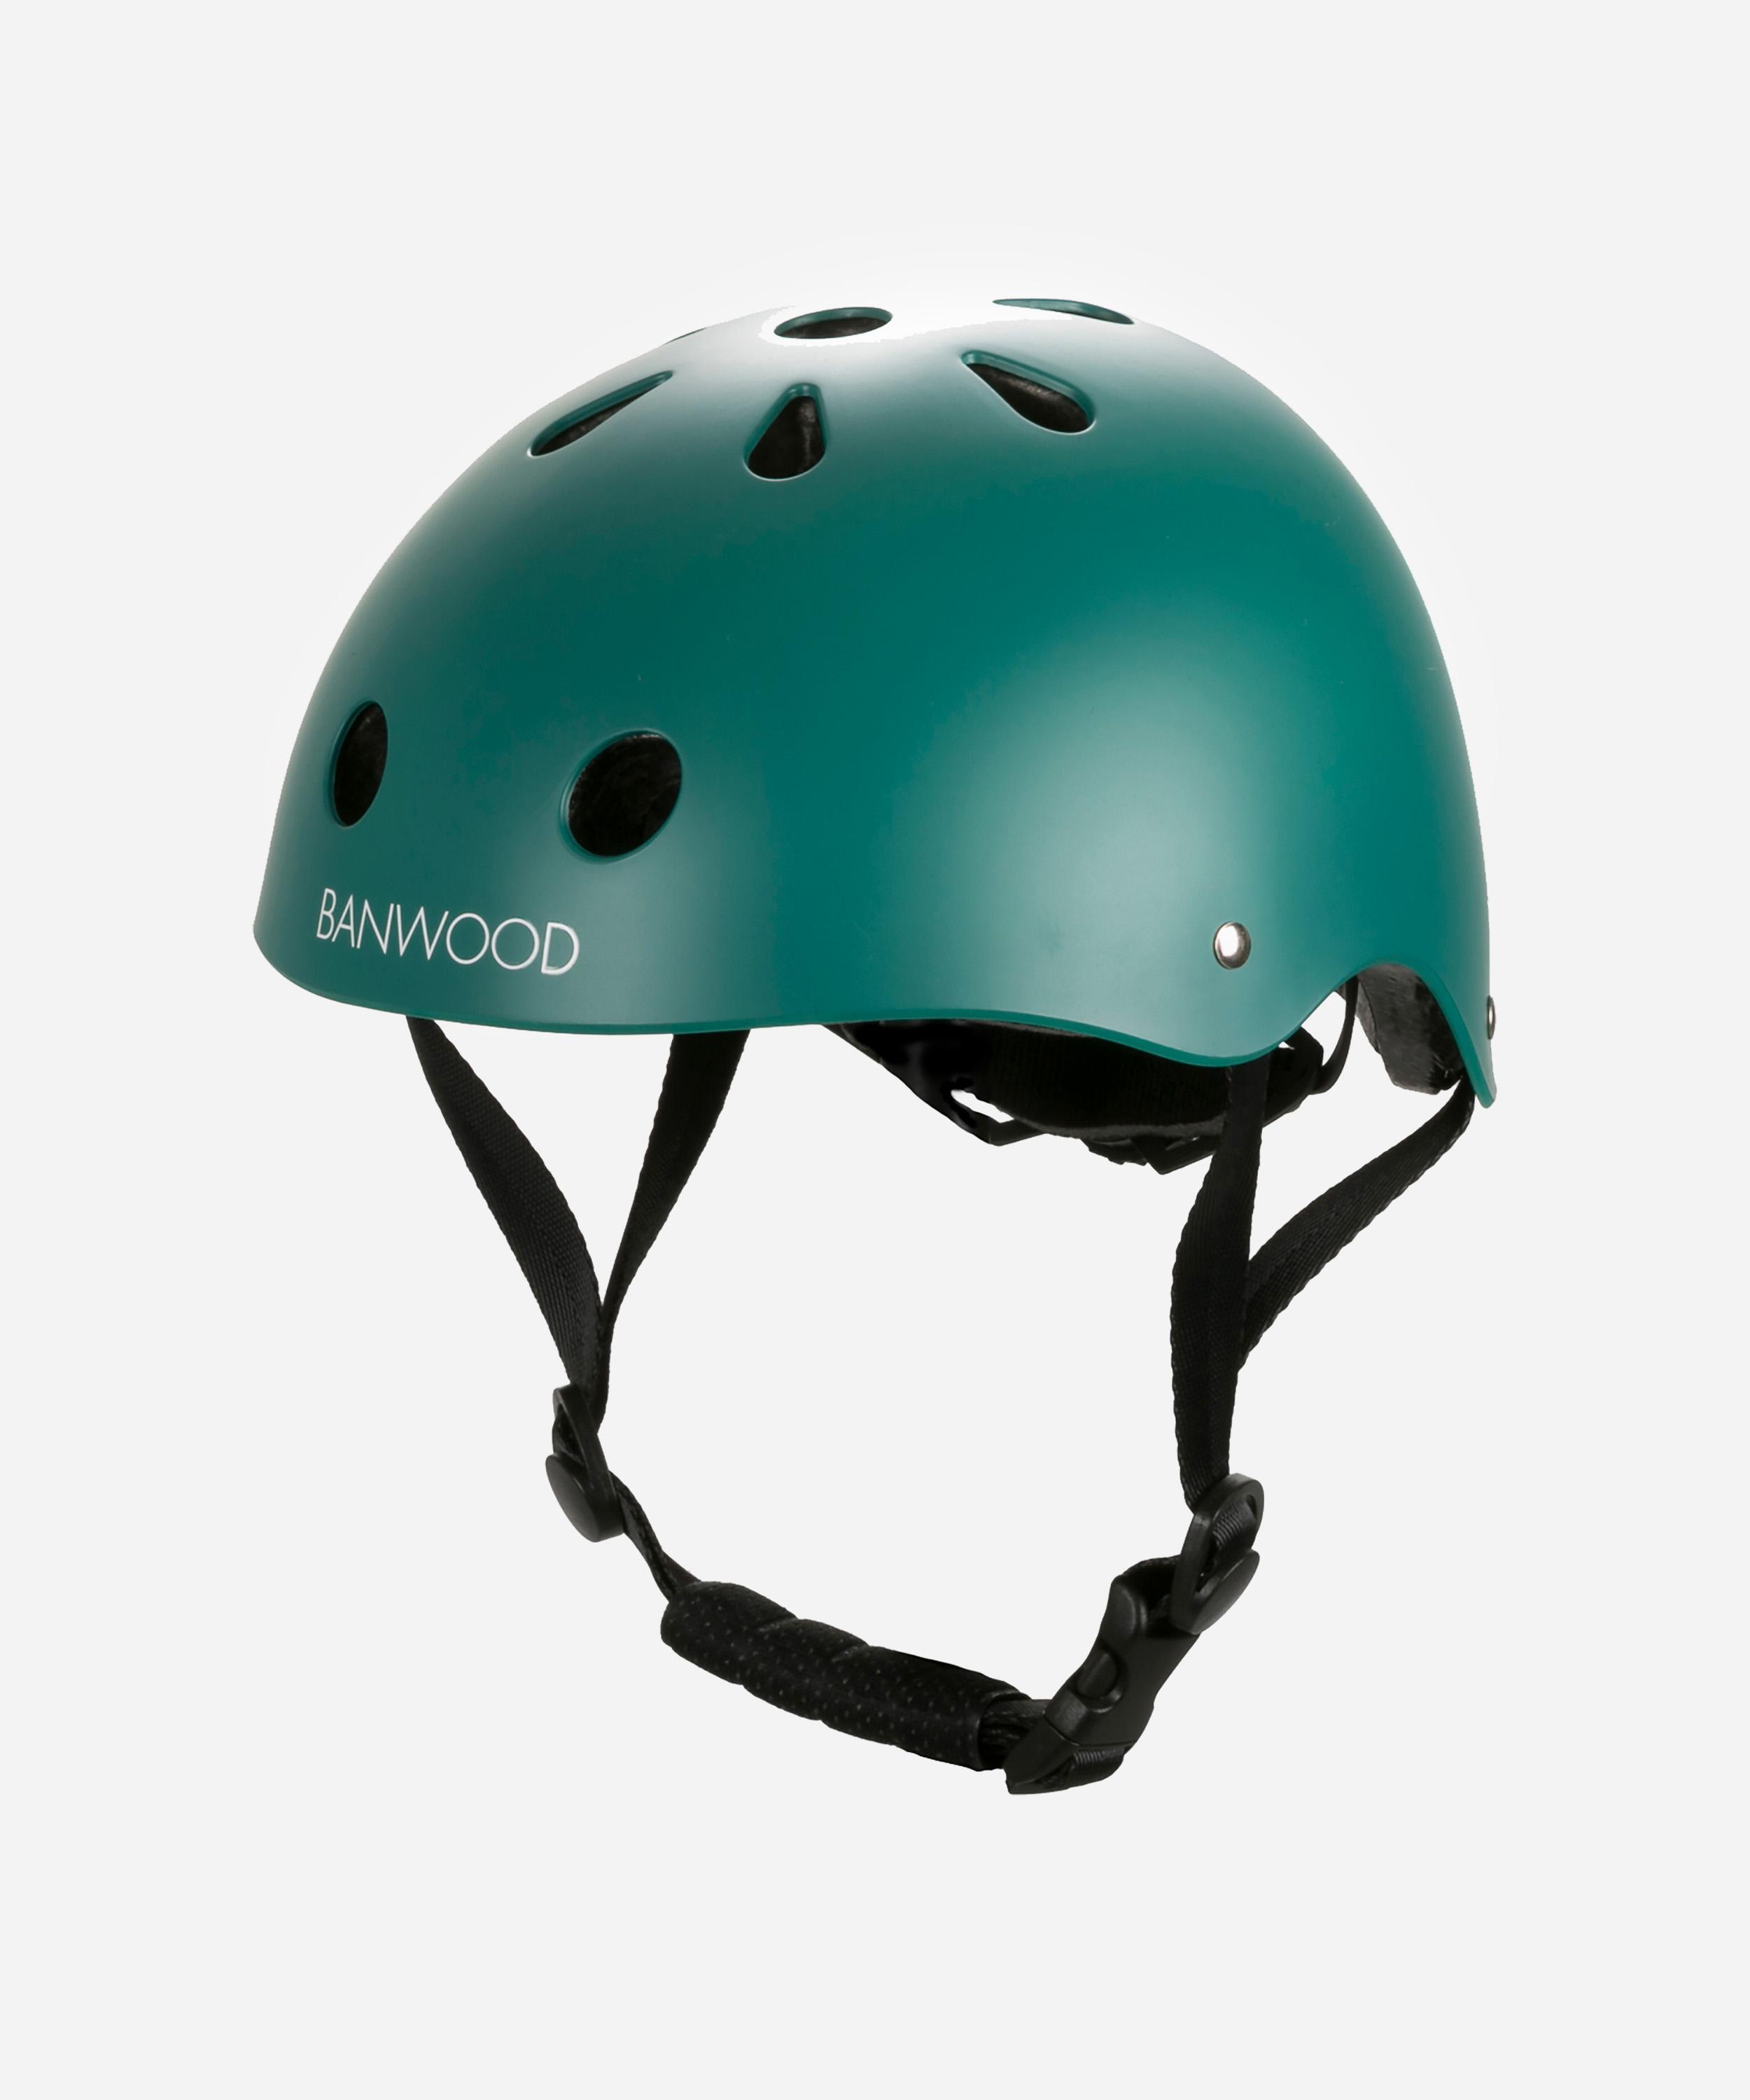 Banwood Helmet Liberty Deals, 54% OFF | www.ingeniovirtual.com